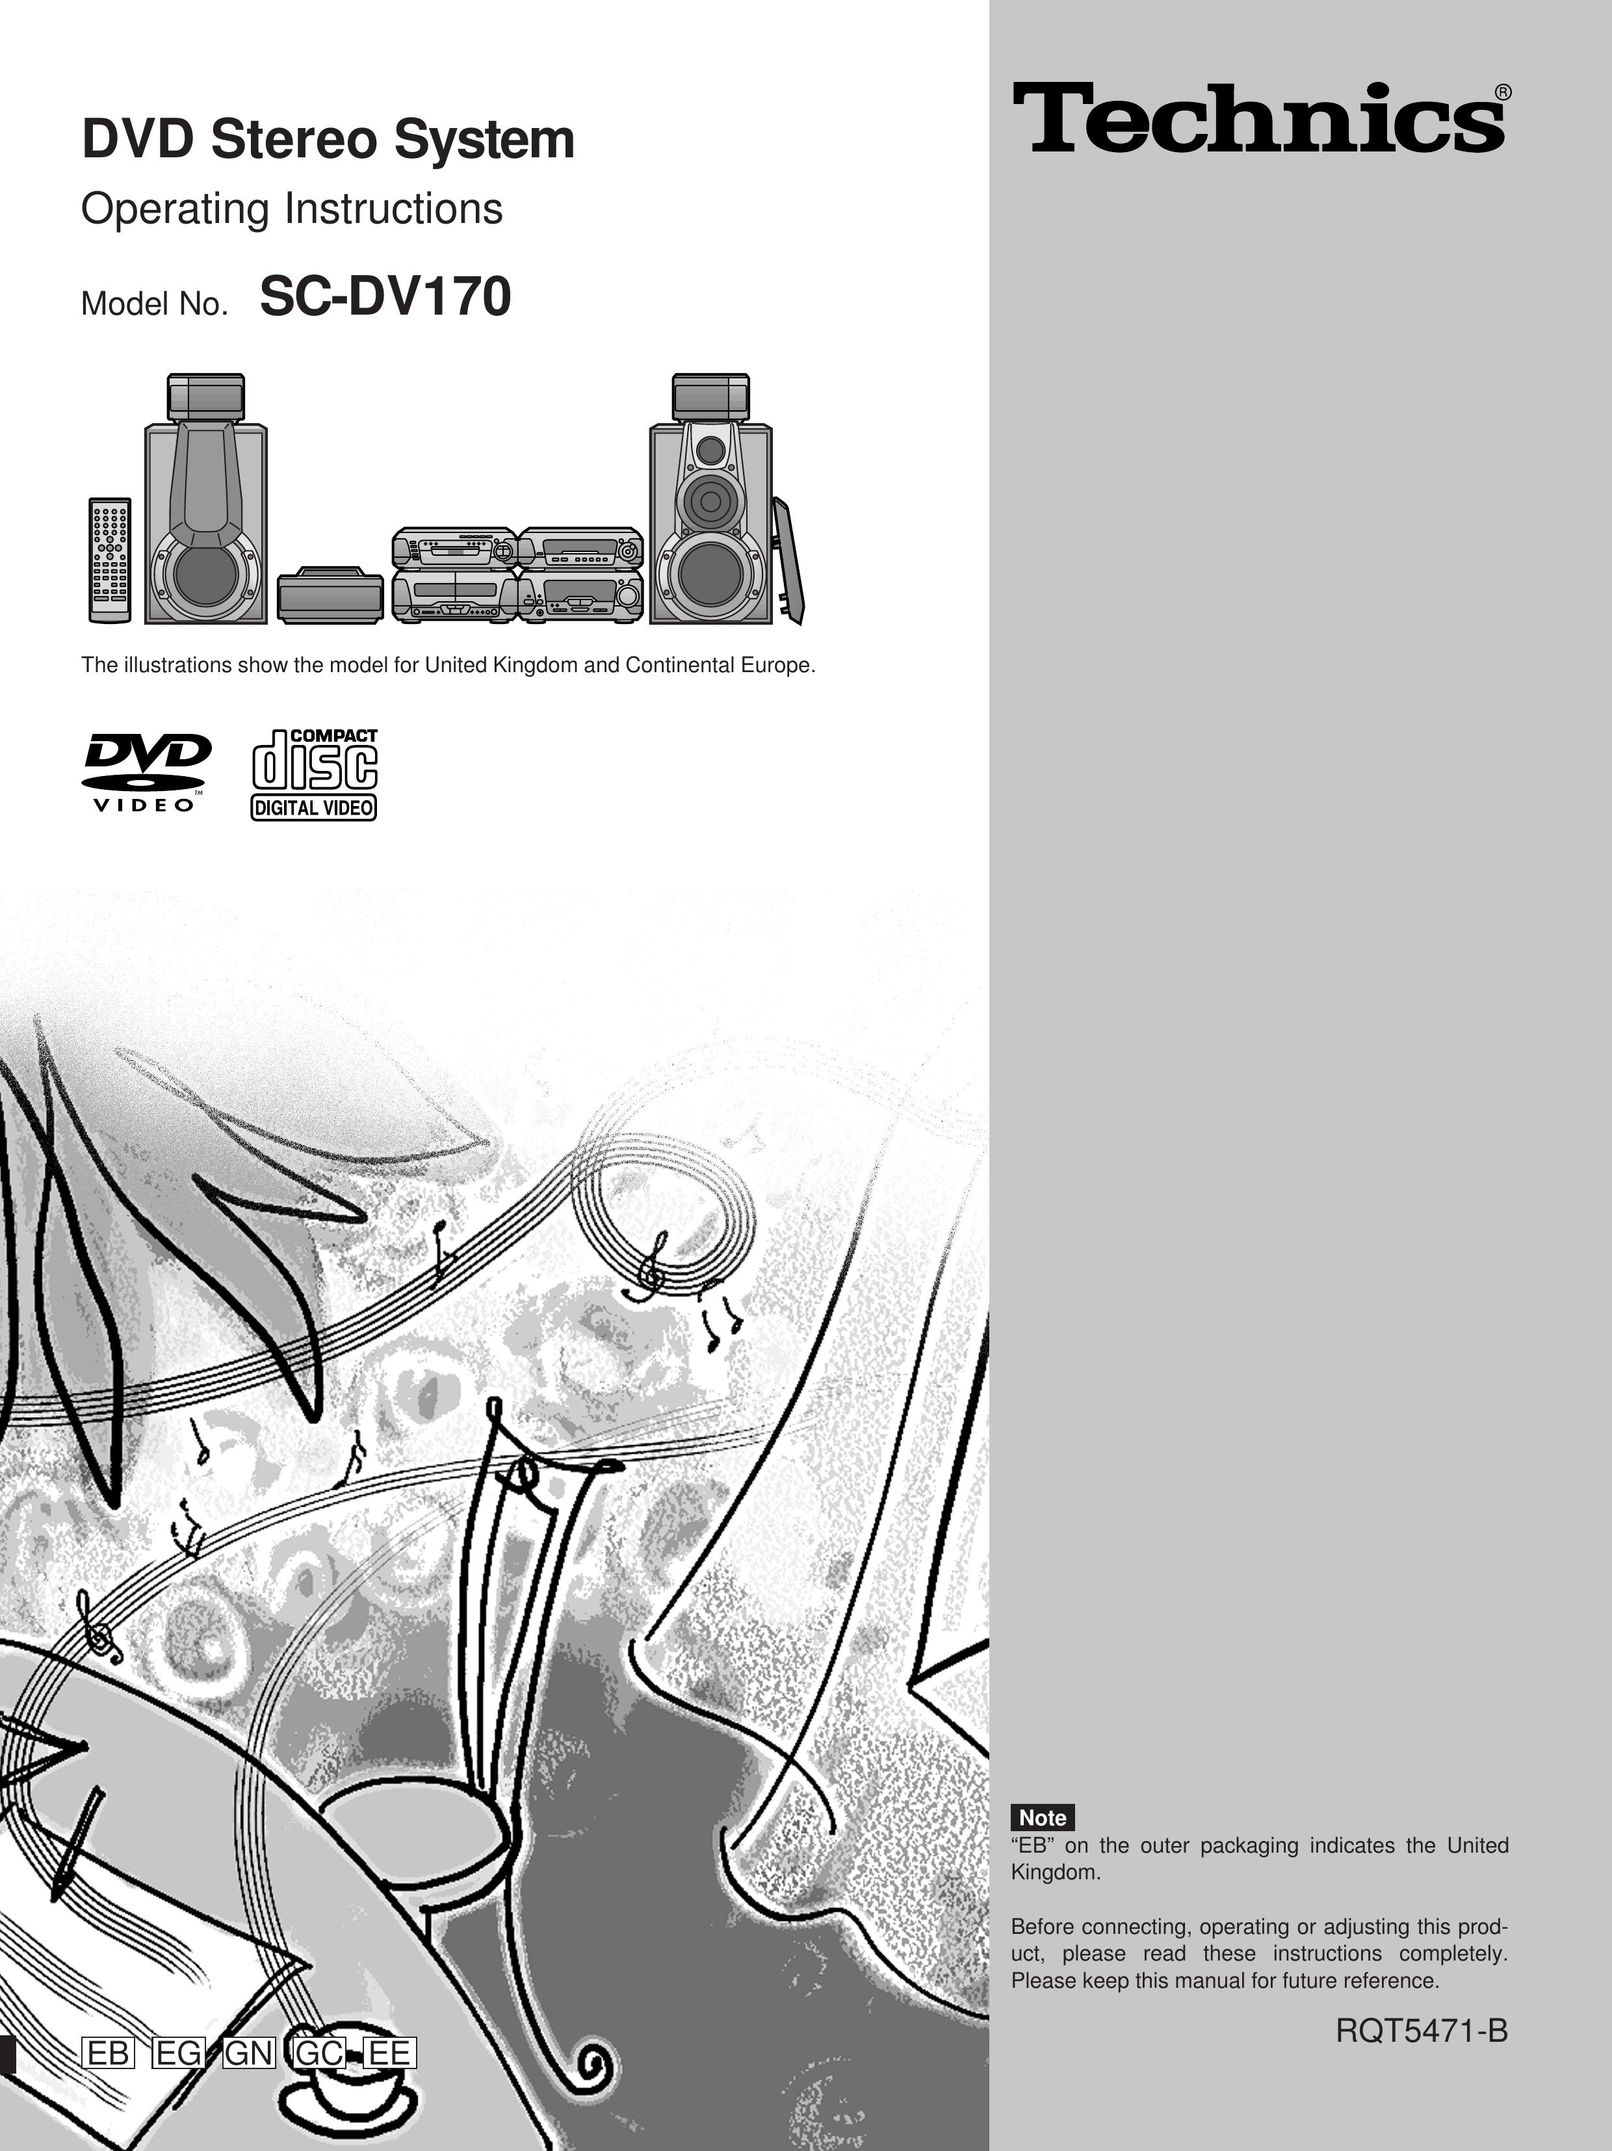 Technics SC-DV170 Home Theater System User Manual